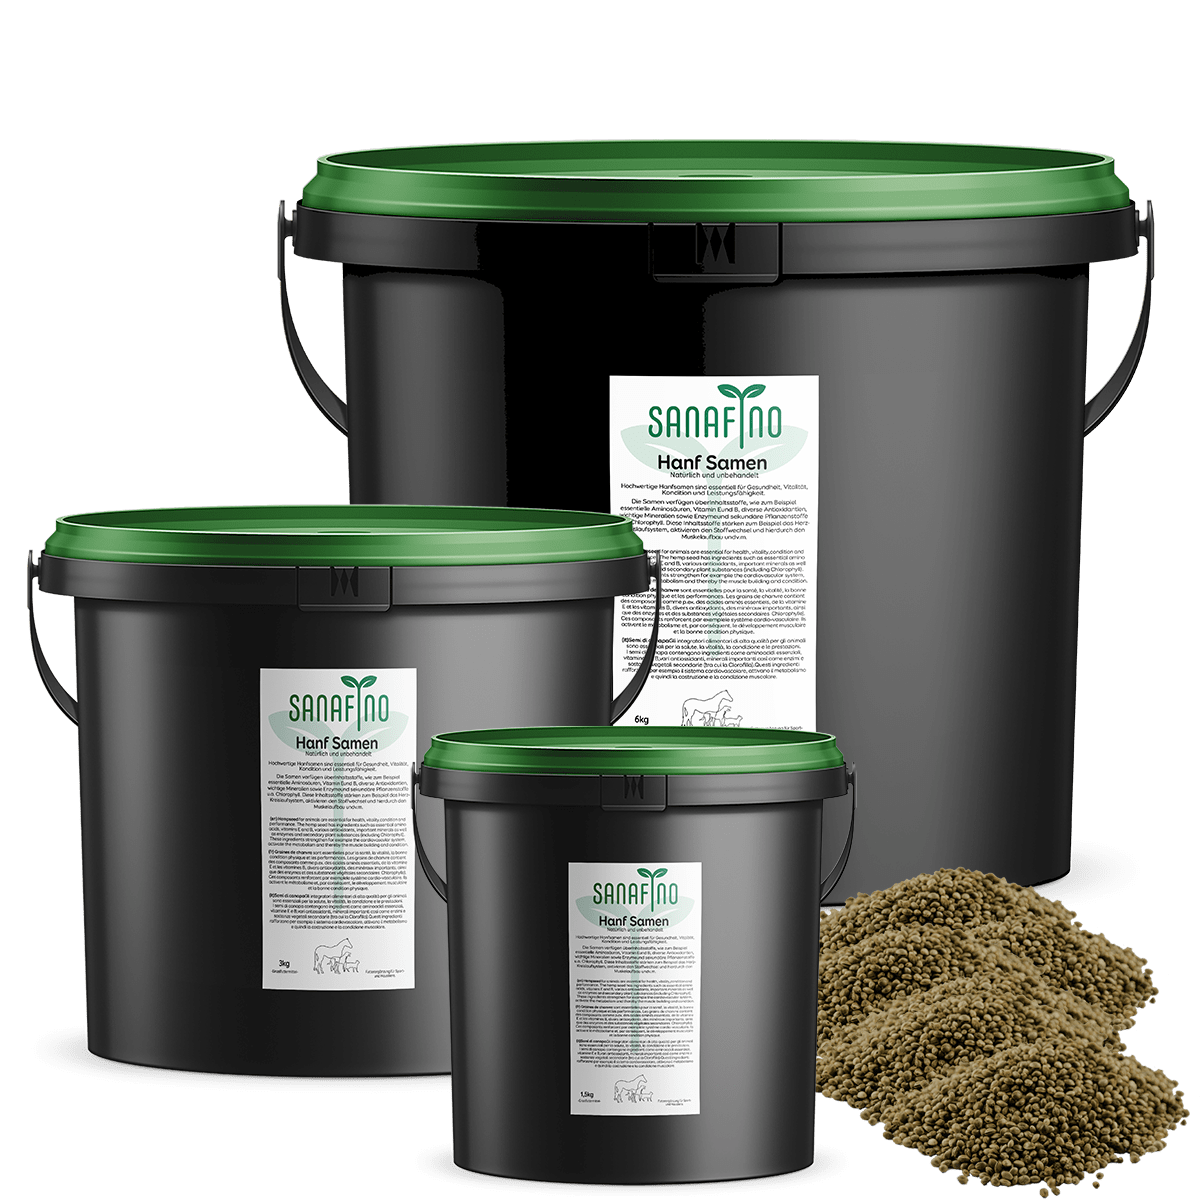 Hemp seeds from Sanafino for animals